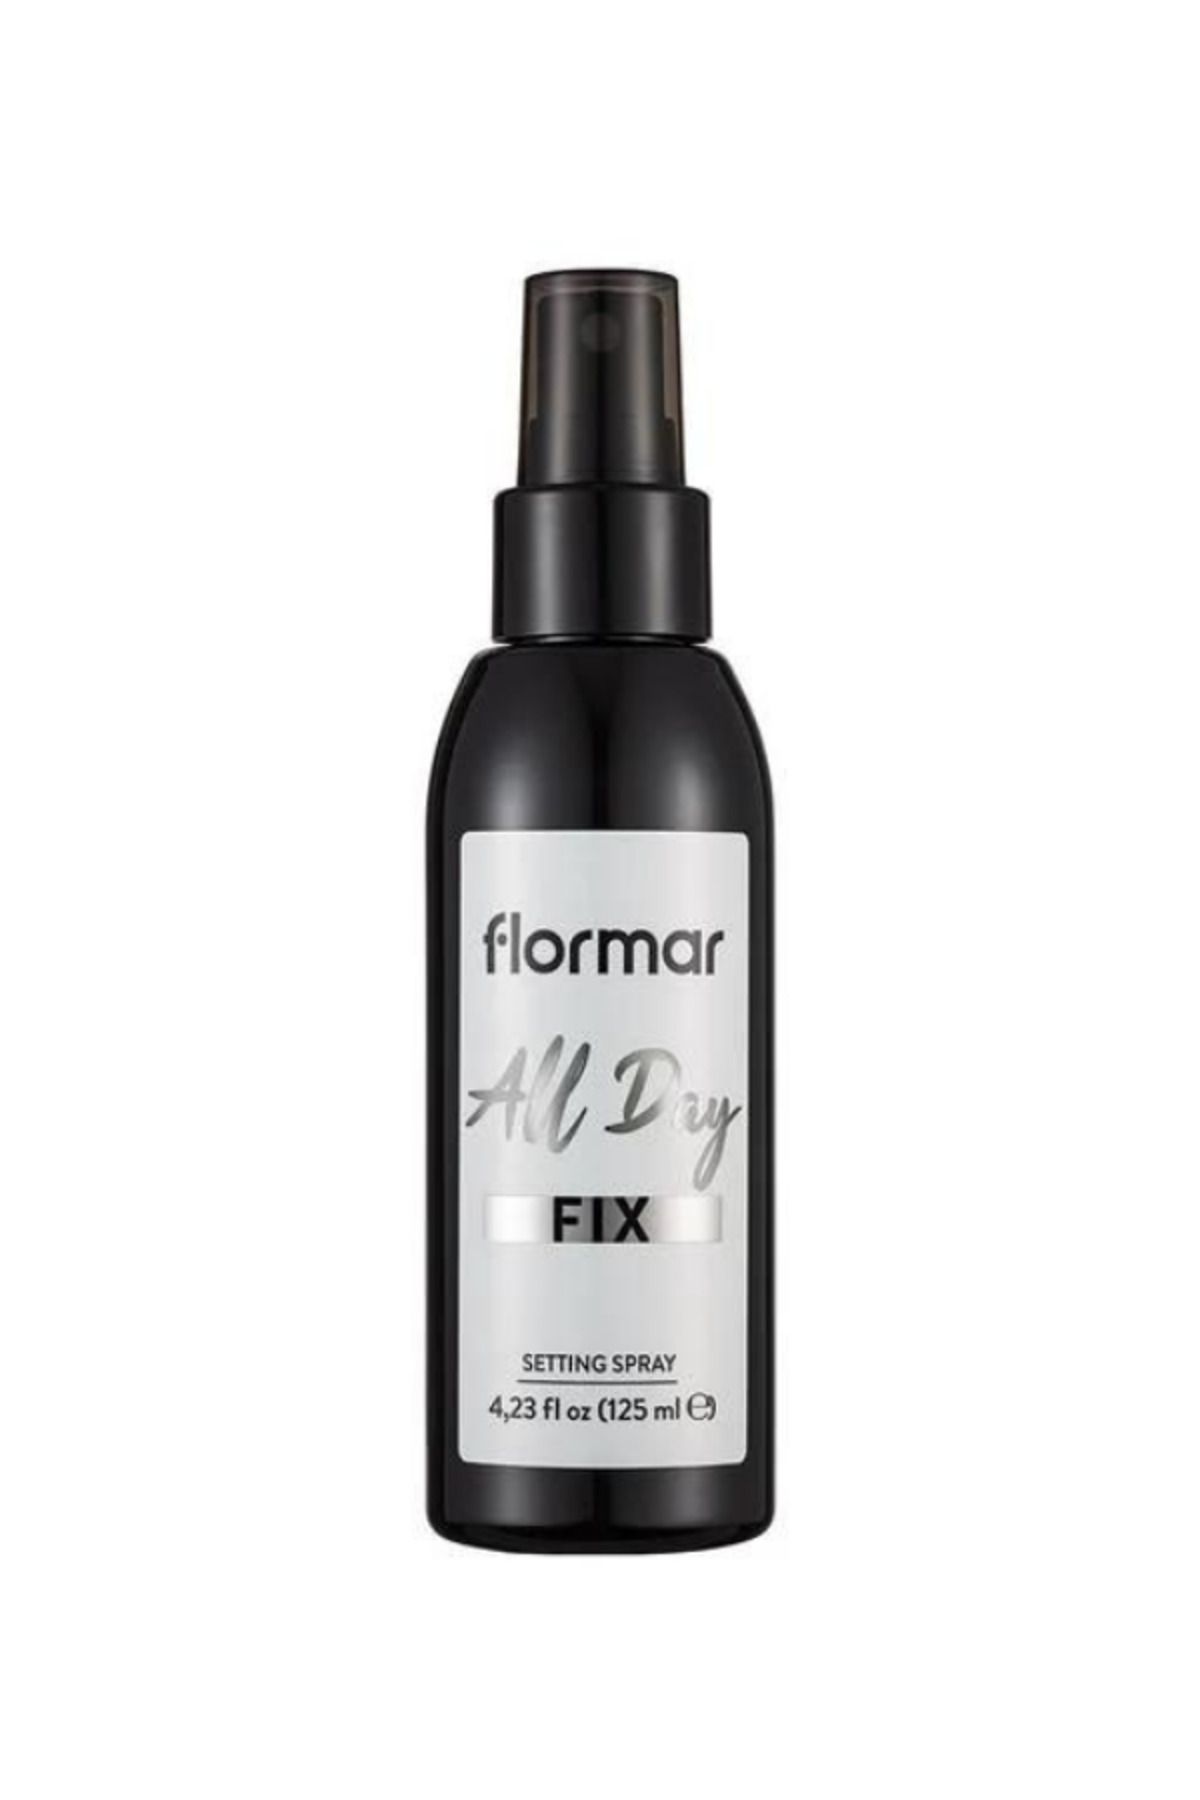 Flormar استشوار ثابت کننده آرایش نیمه مات تمام روزه / اسپری ثابت کننده آرایش تمام روزه